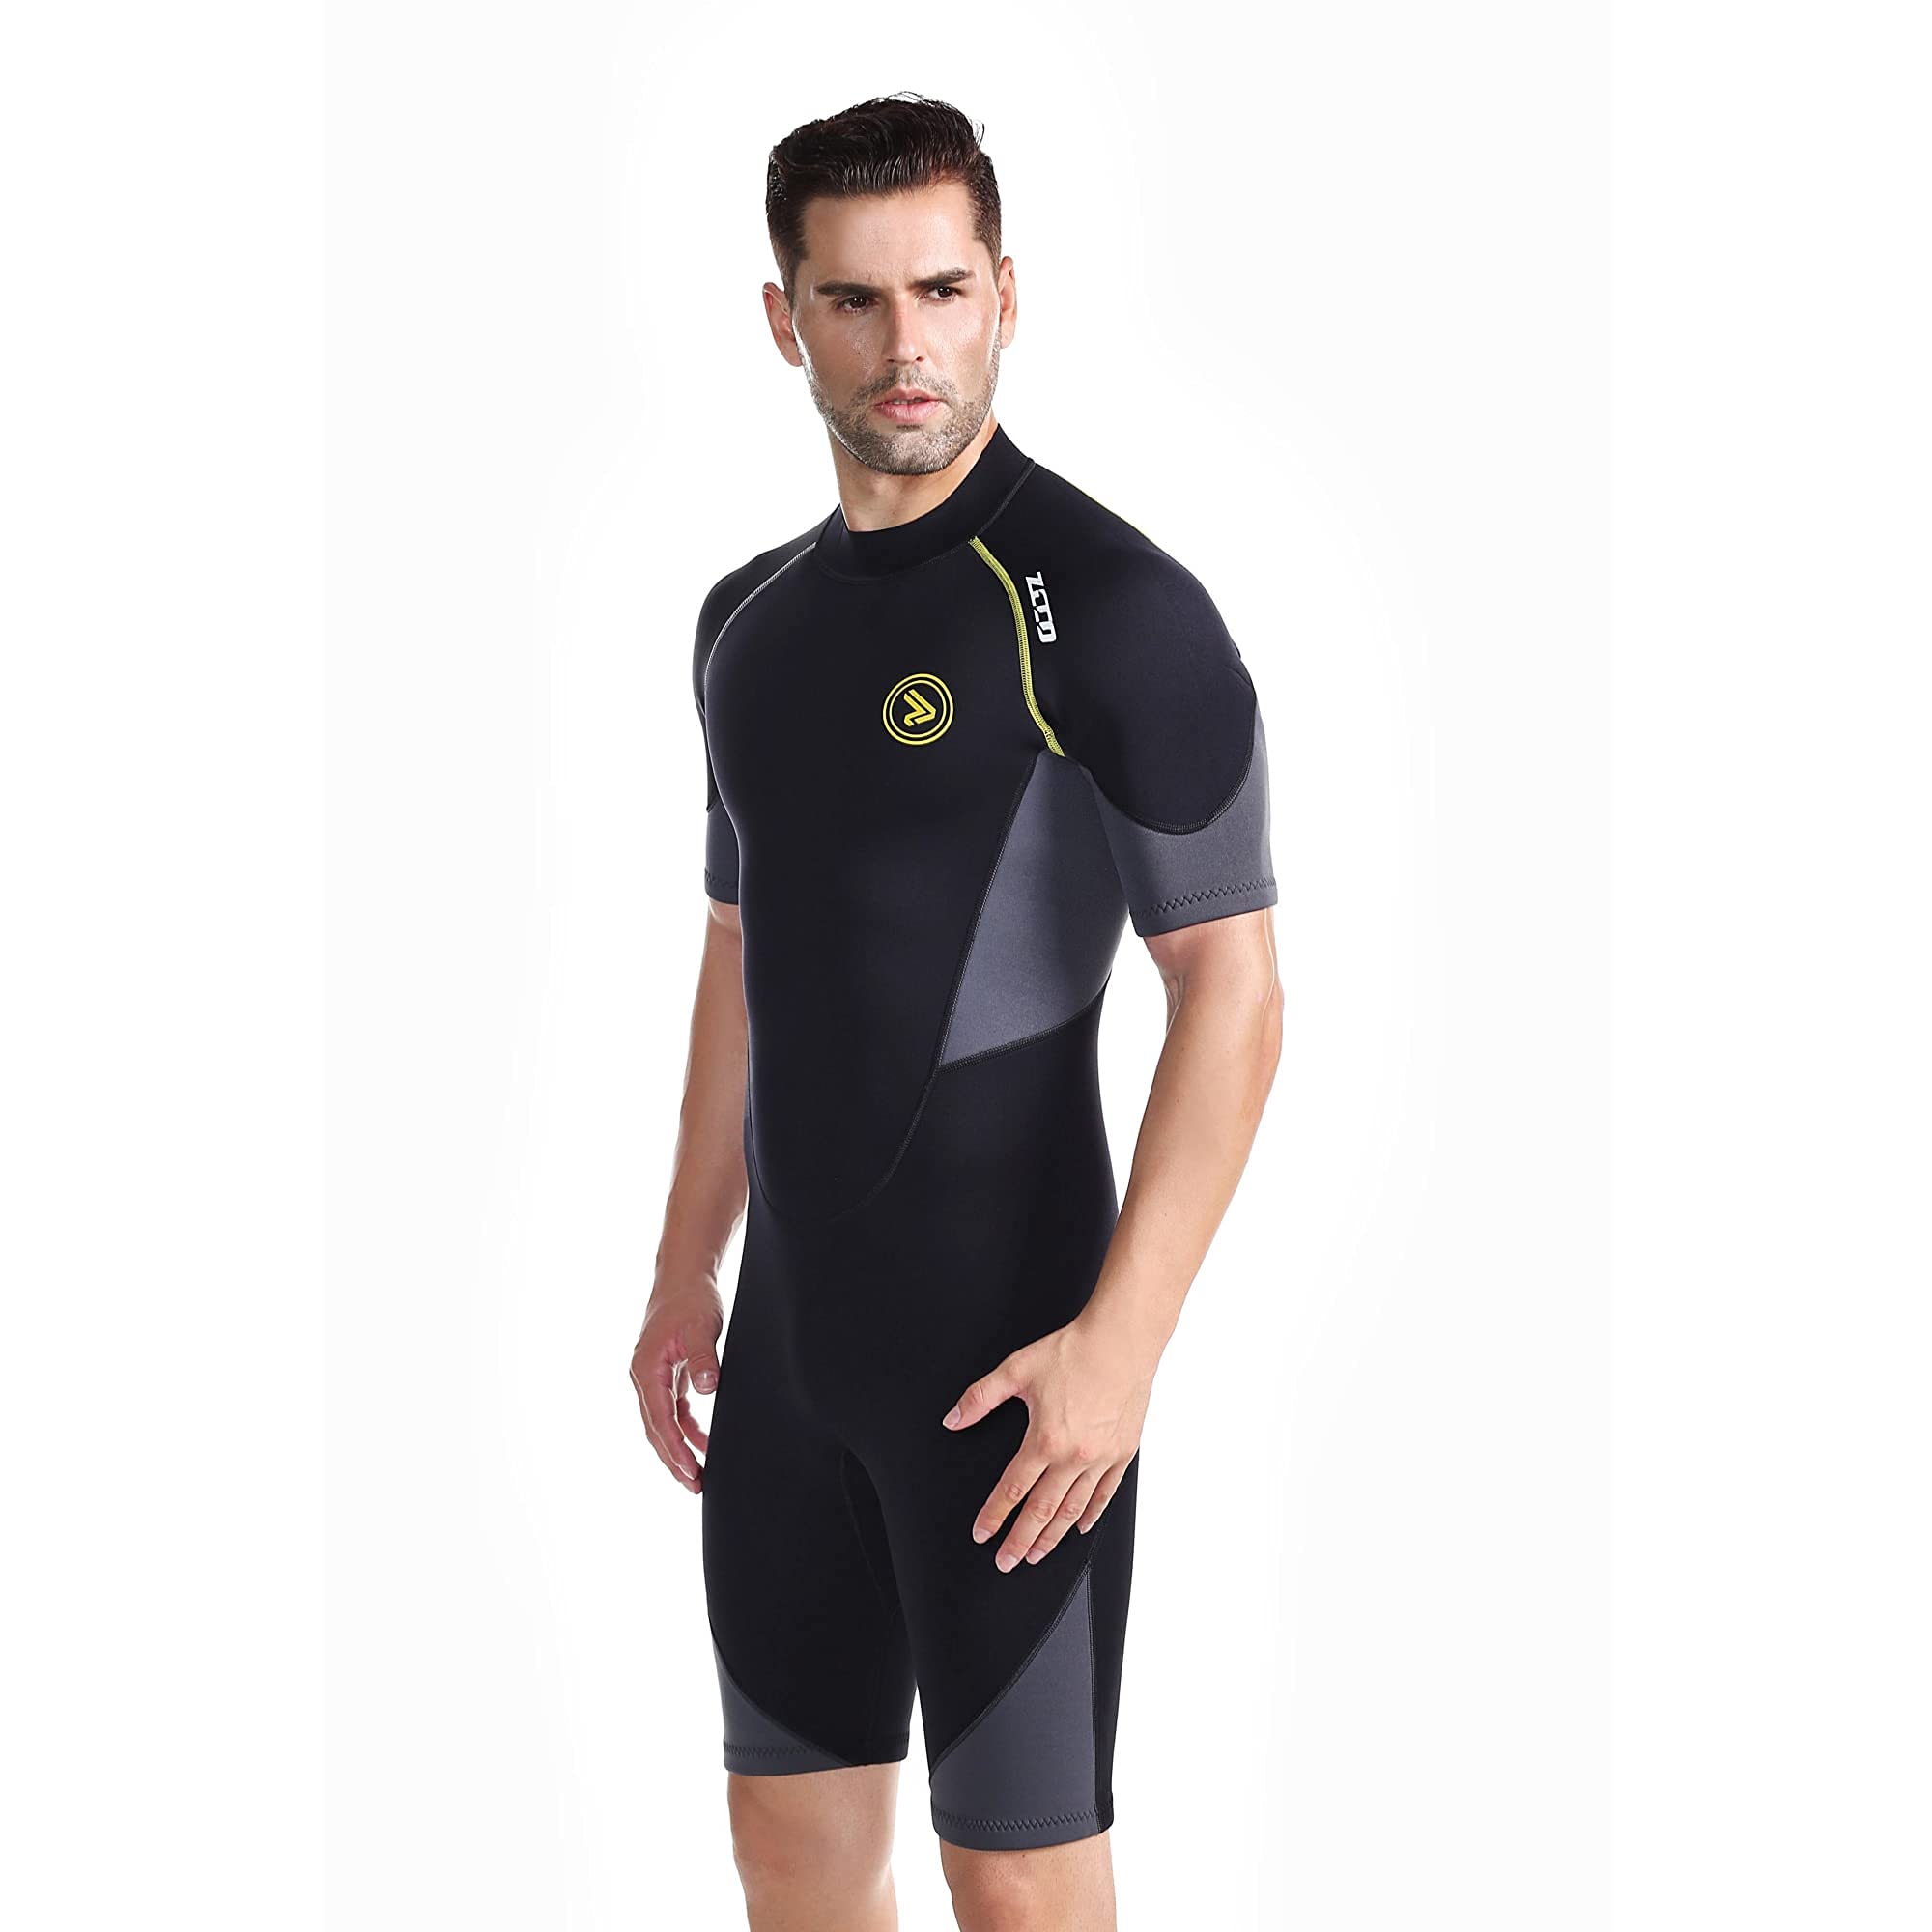 ZCCO Men's Shorty Wetsuits 1.5mm Premium Neoprene Back Zip Short Sleeve for  Scuba Diving,Spearfishing